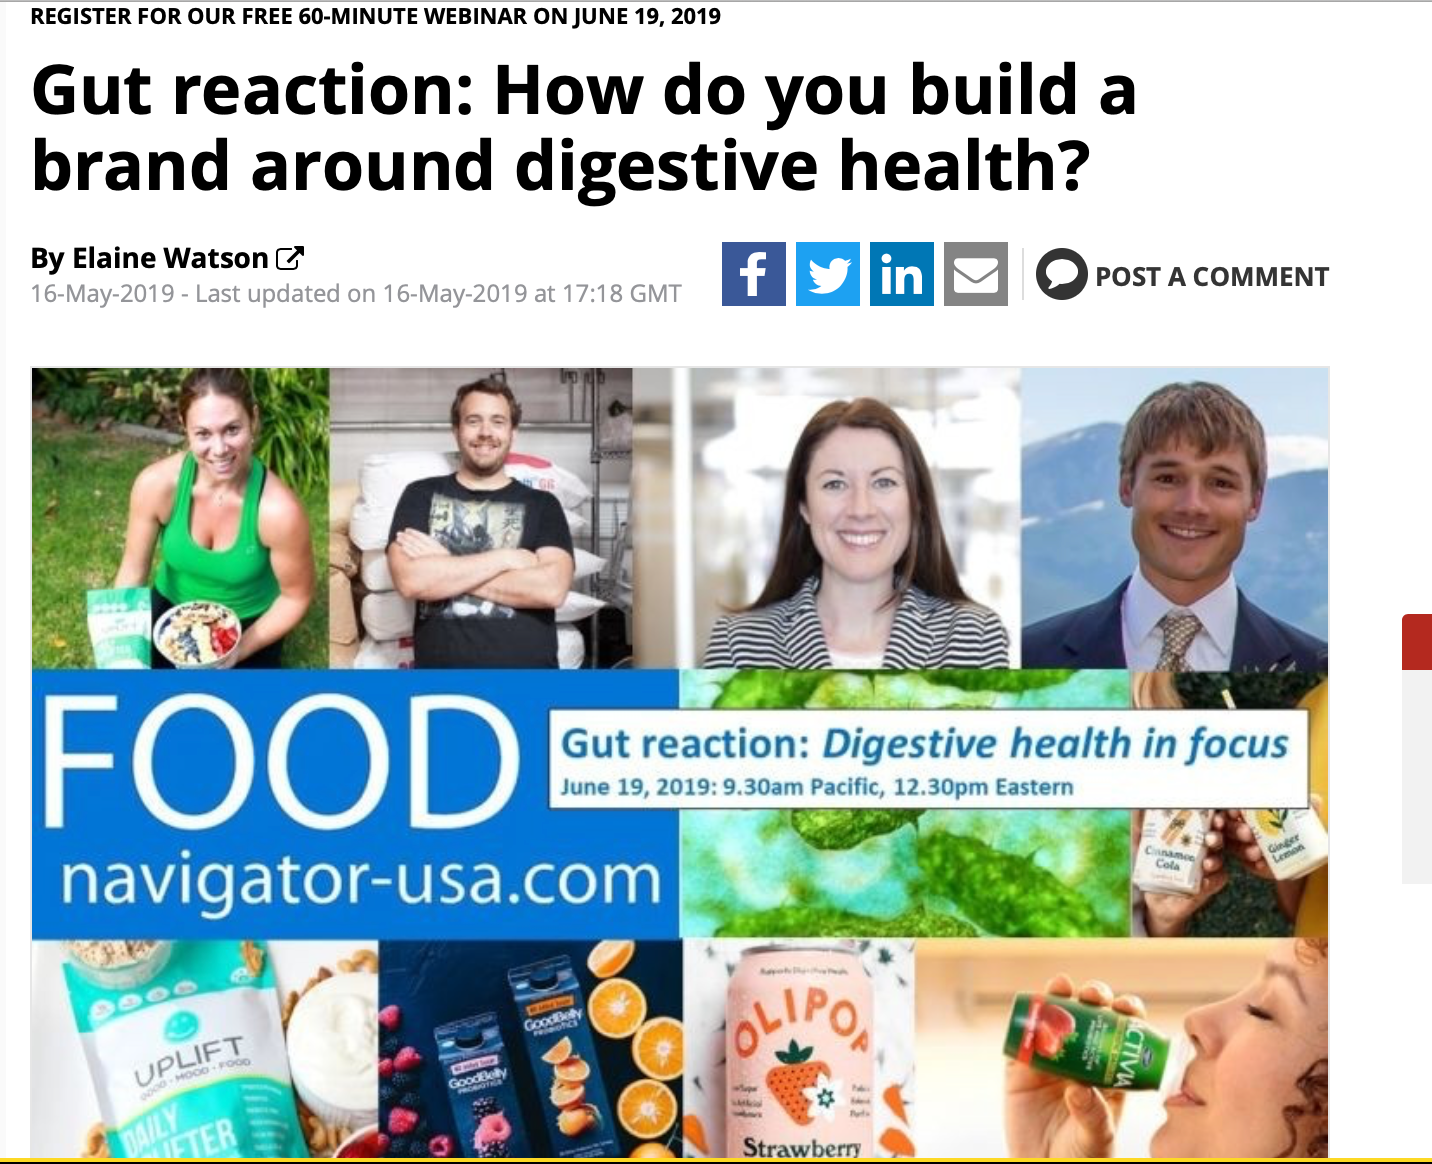 Kara Landau foodnavigator-usa digestive health webinar 2019 brand builder uplift food prebiotics